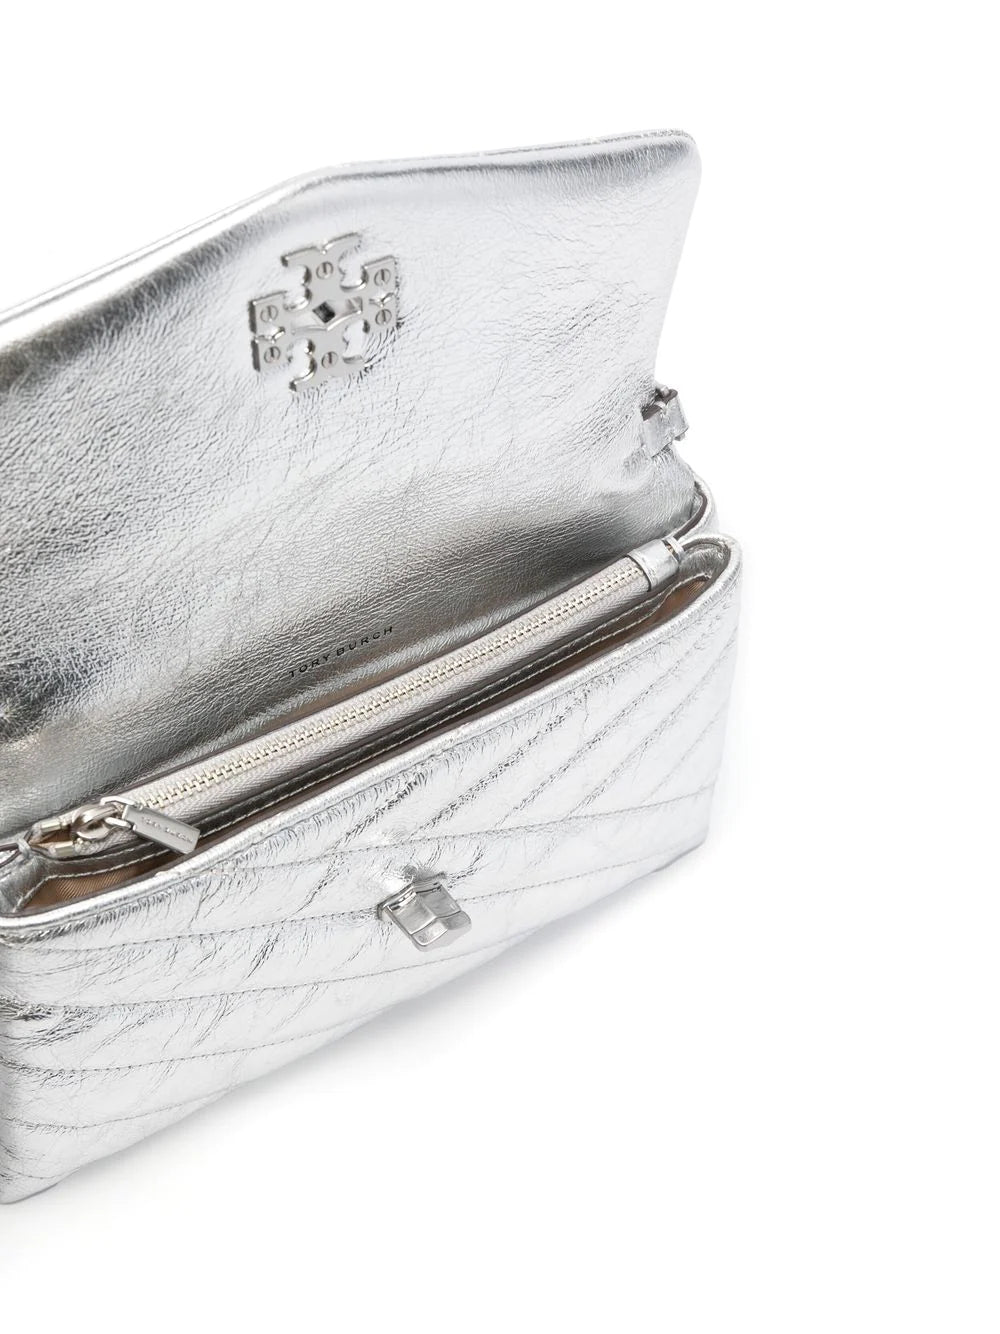 Tory Burch Kira Flap Small Leather Shoulder Bag in Metallic